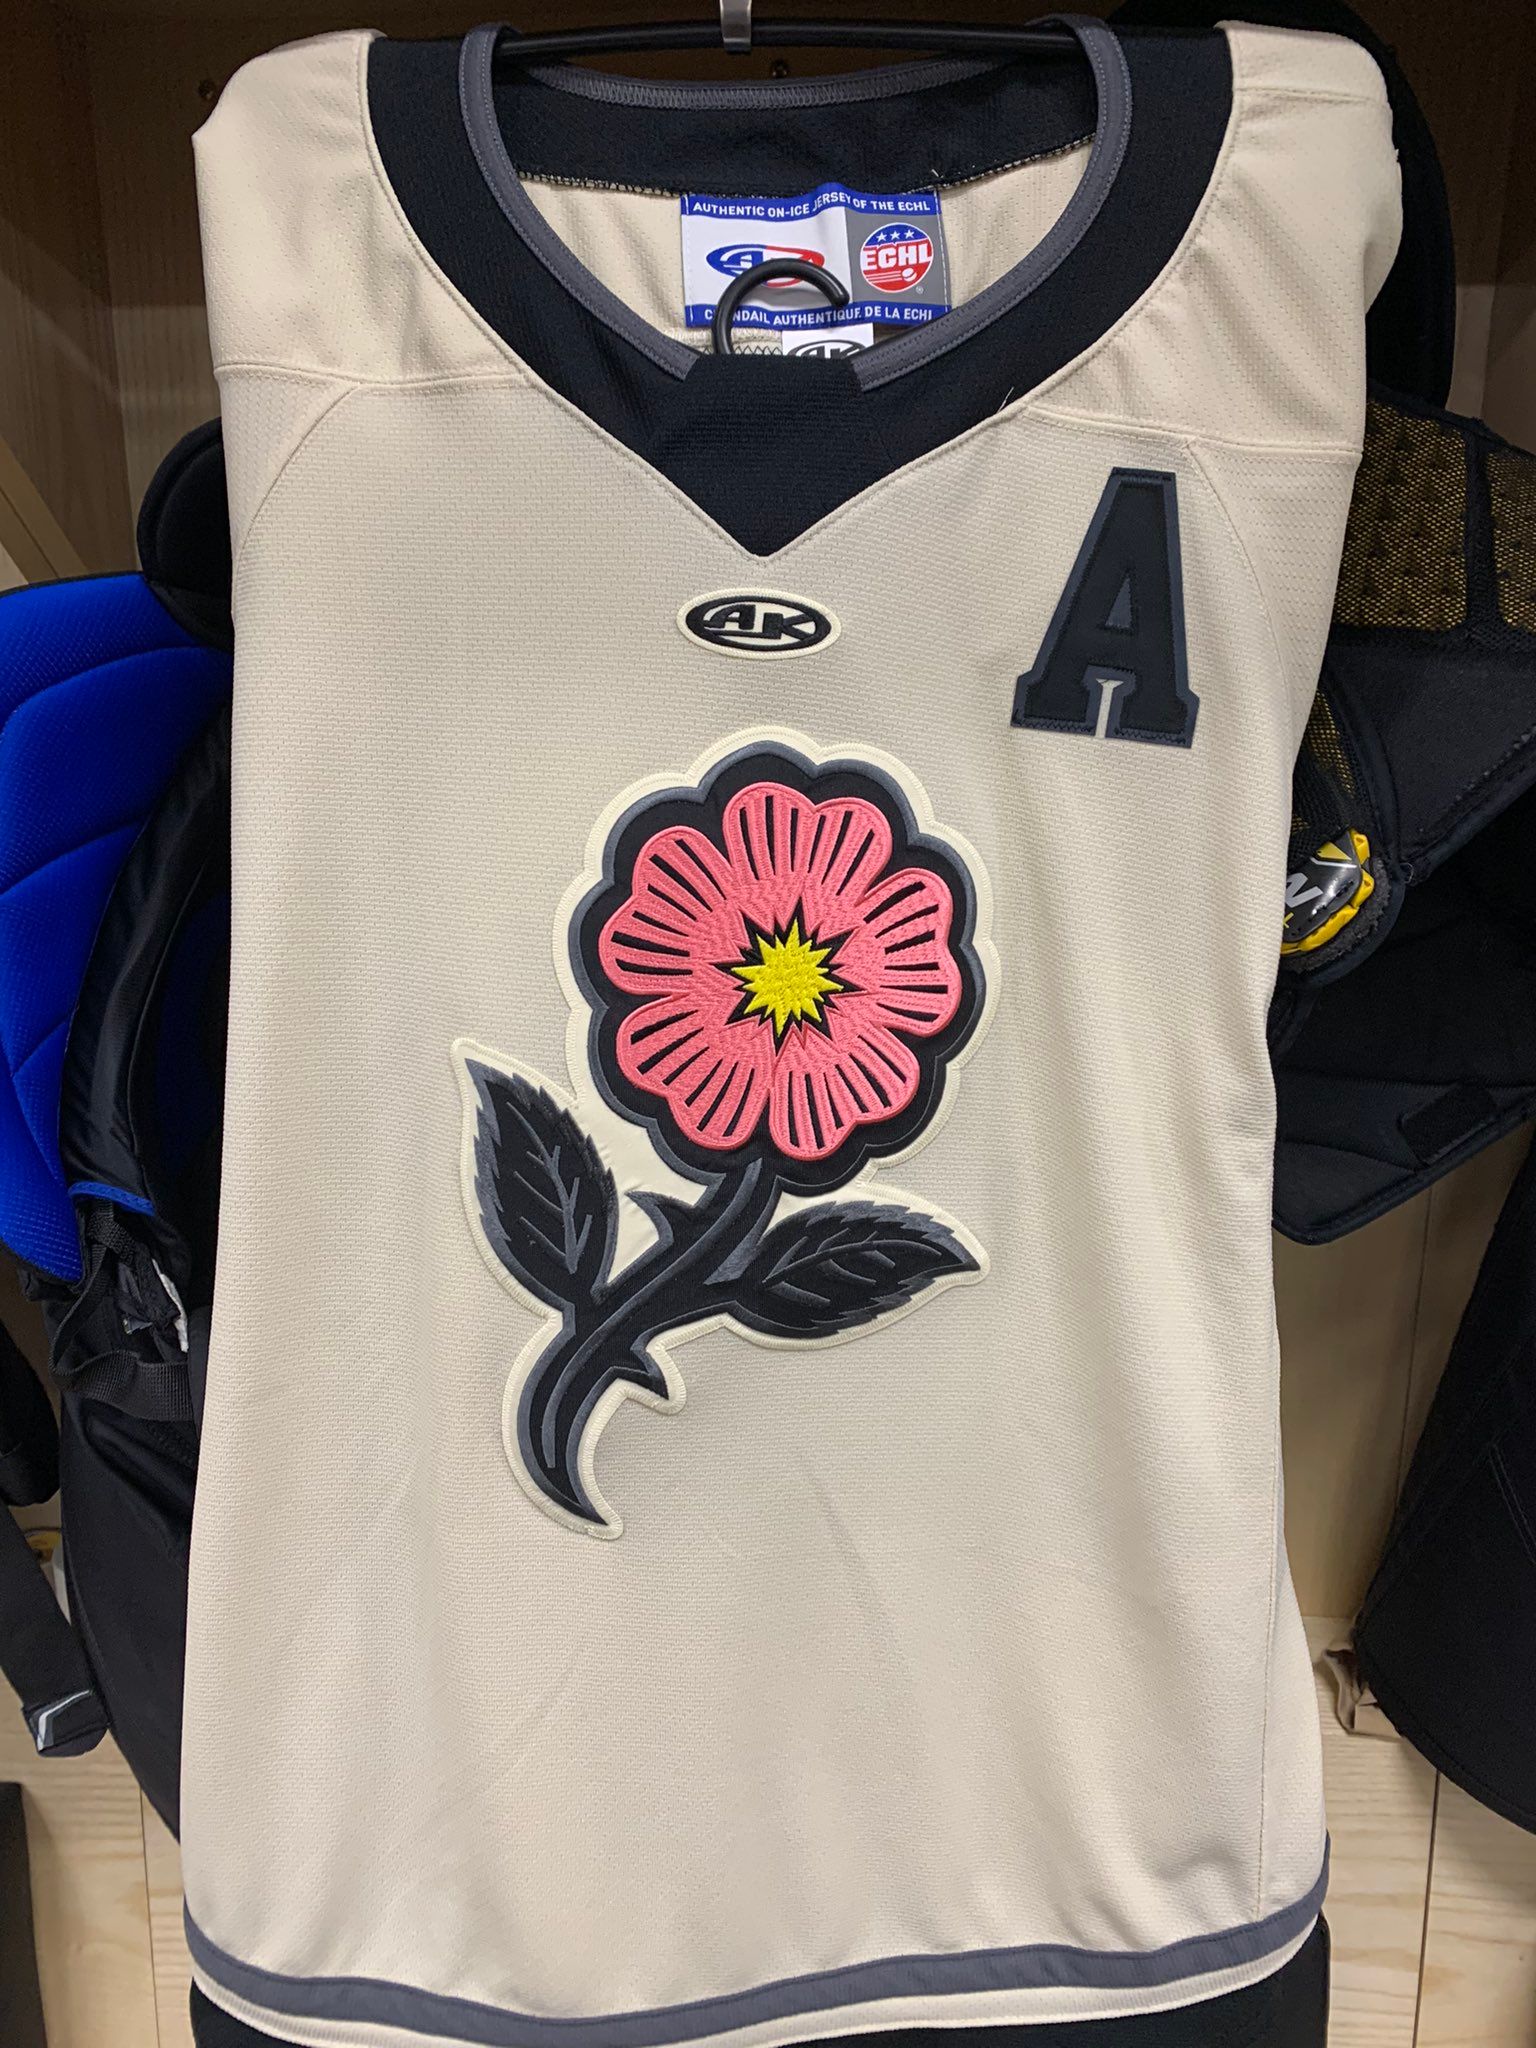 Iowa Heartlanders revealed their jerseys today : r/hockeyjerseys